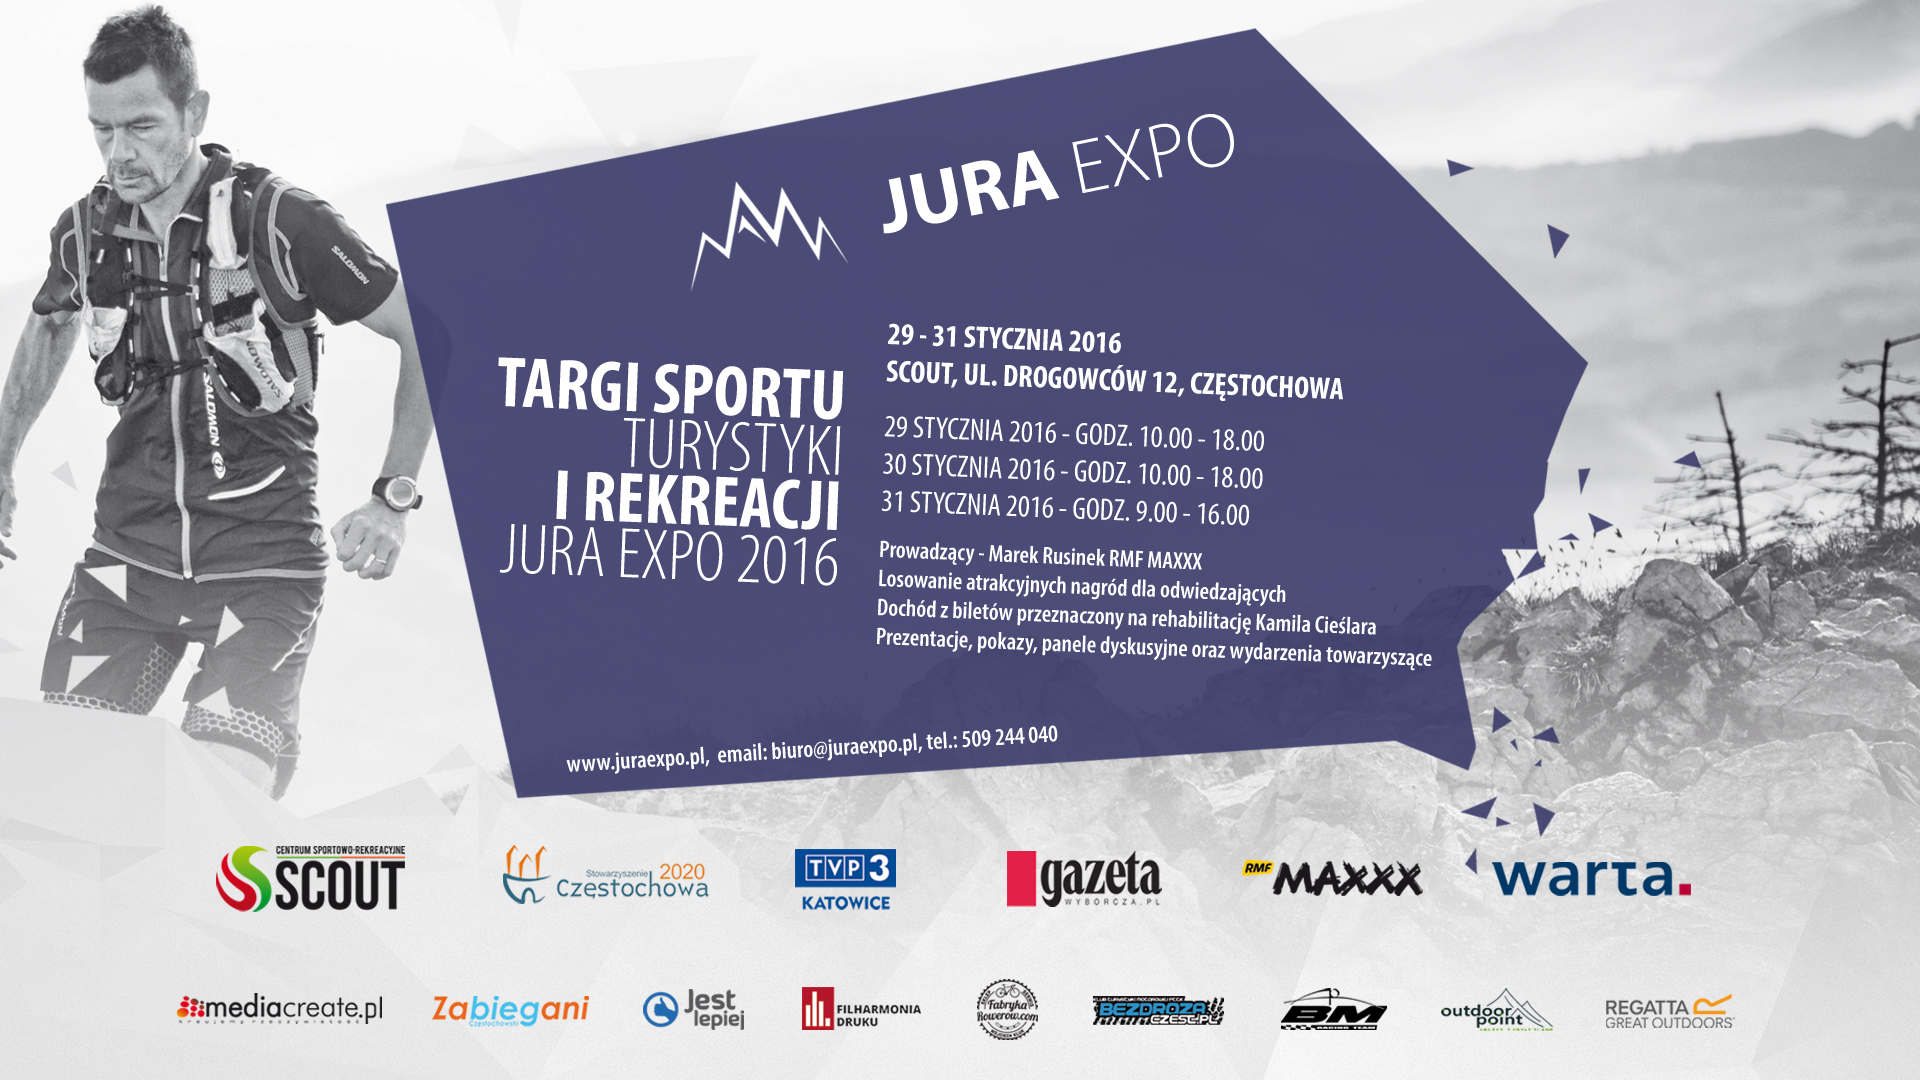 Targi Sportu, Turystyki i Rekreacji JURA EXPO 2016 - 29-31.01.2016